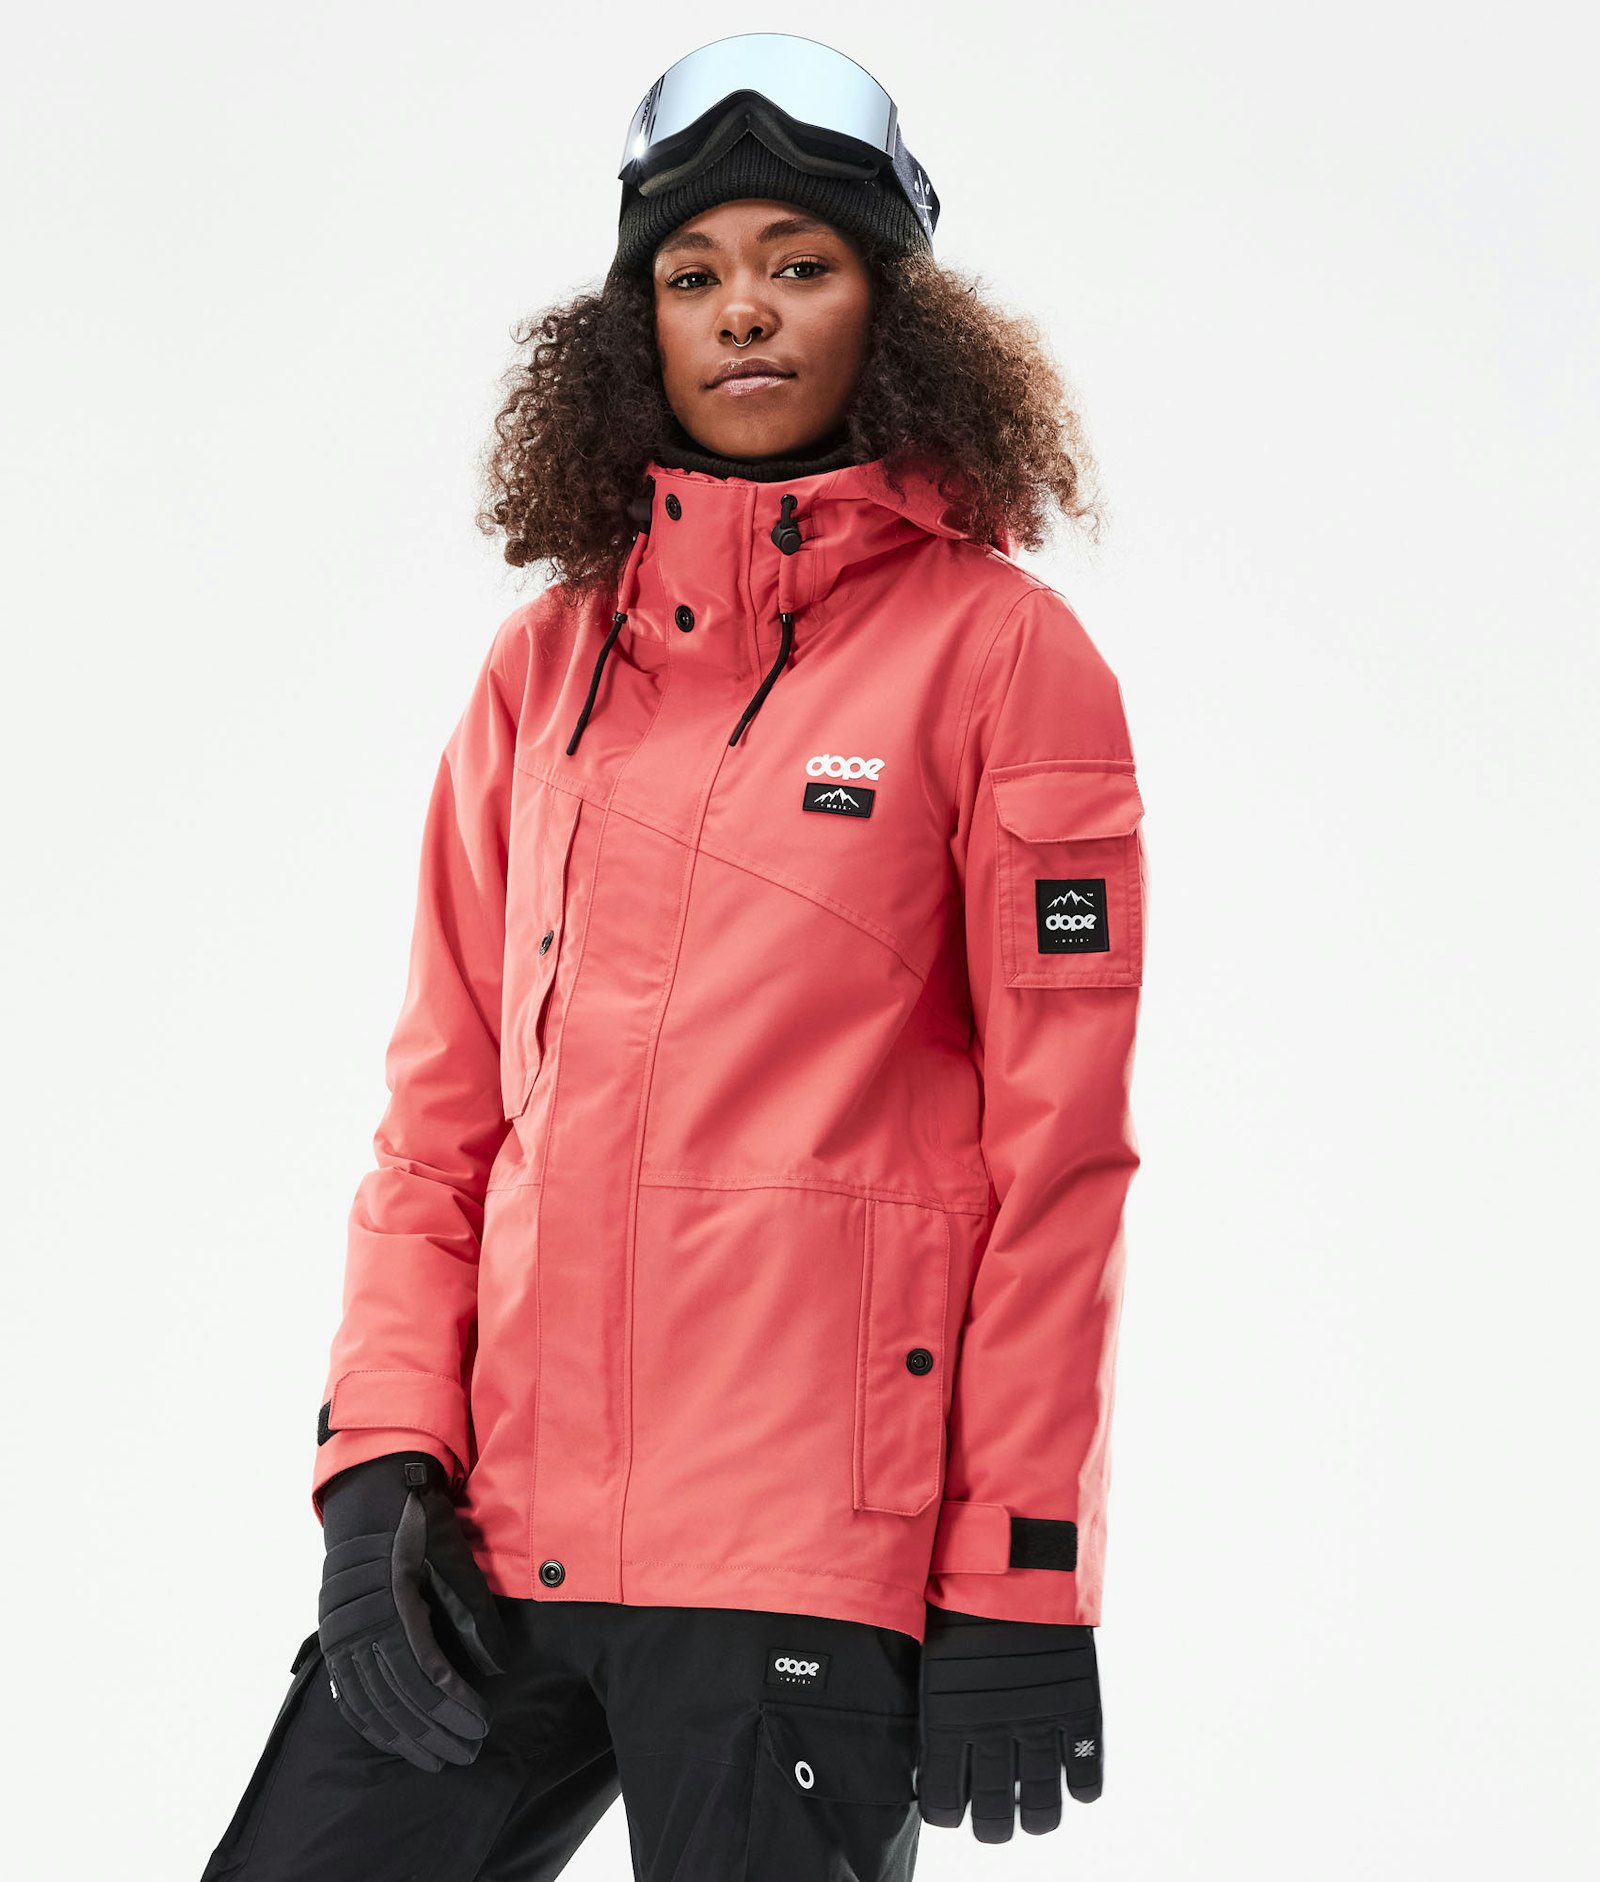 Adept W 2021 Ski Jacket Women Coral